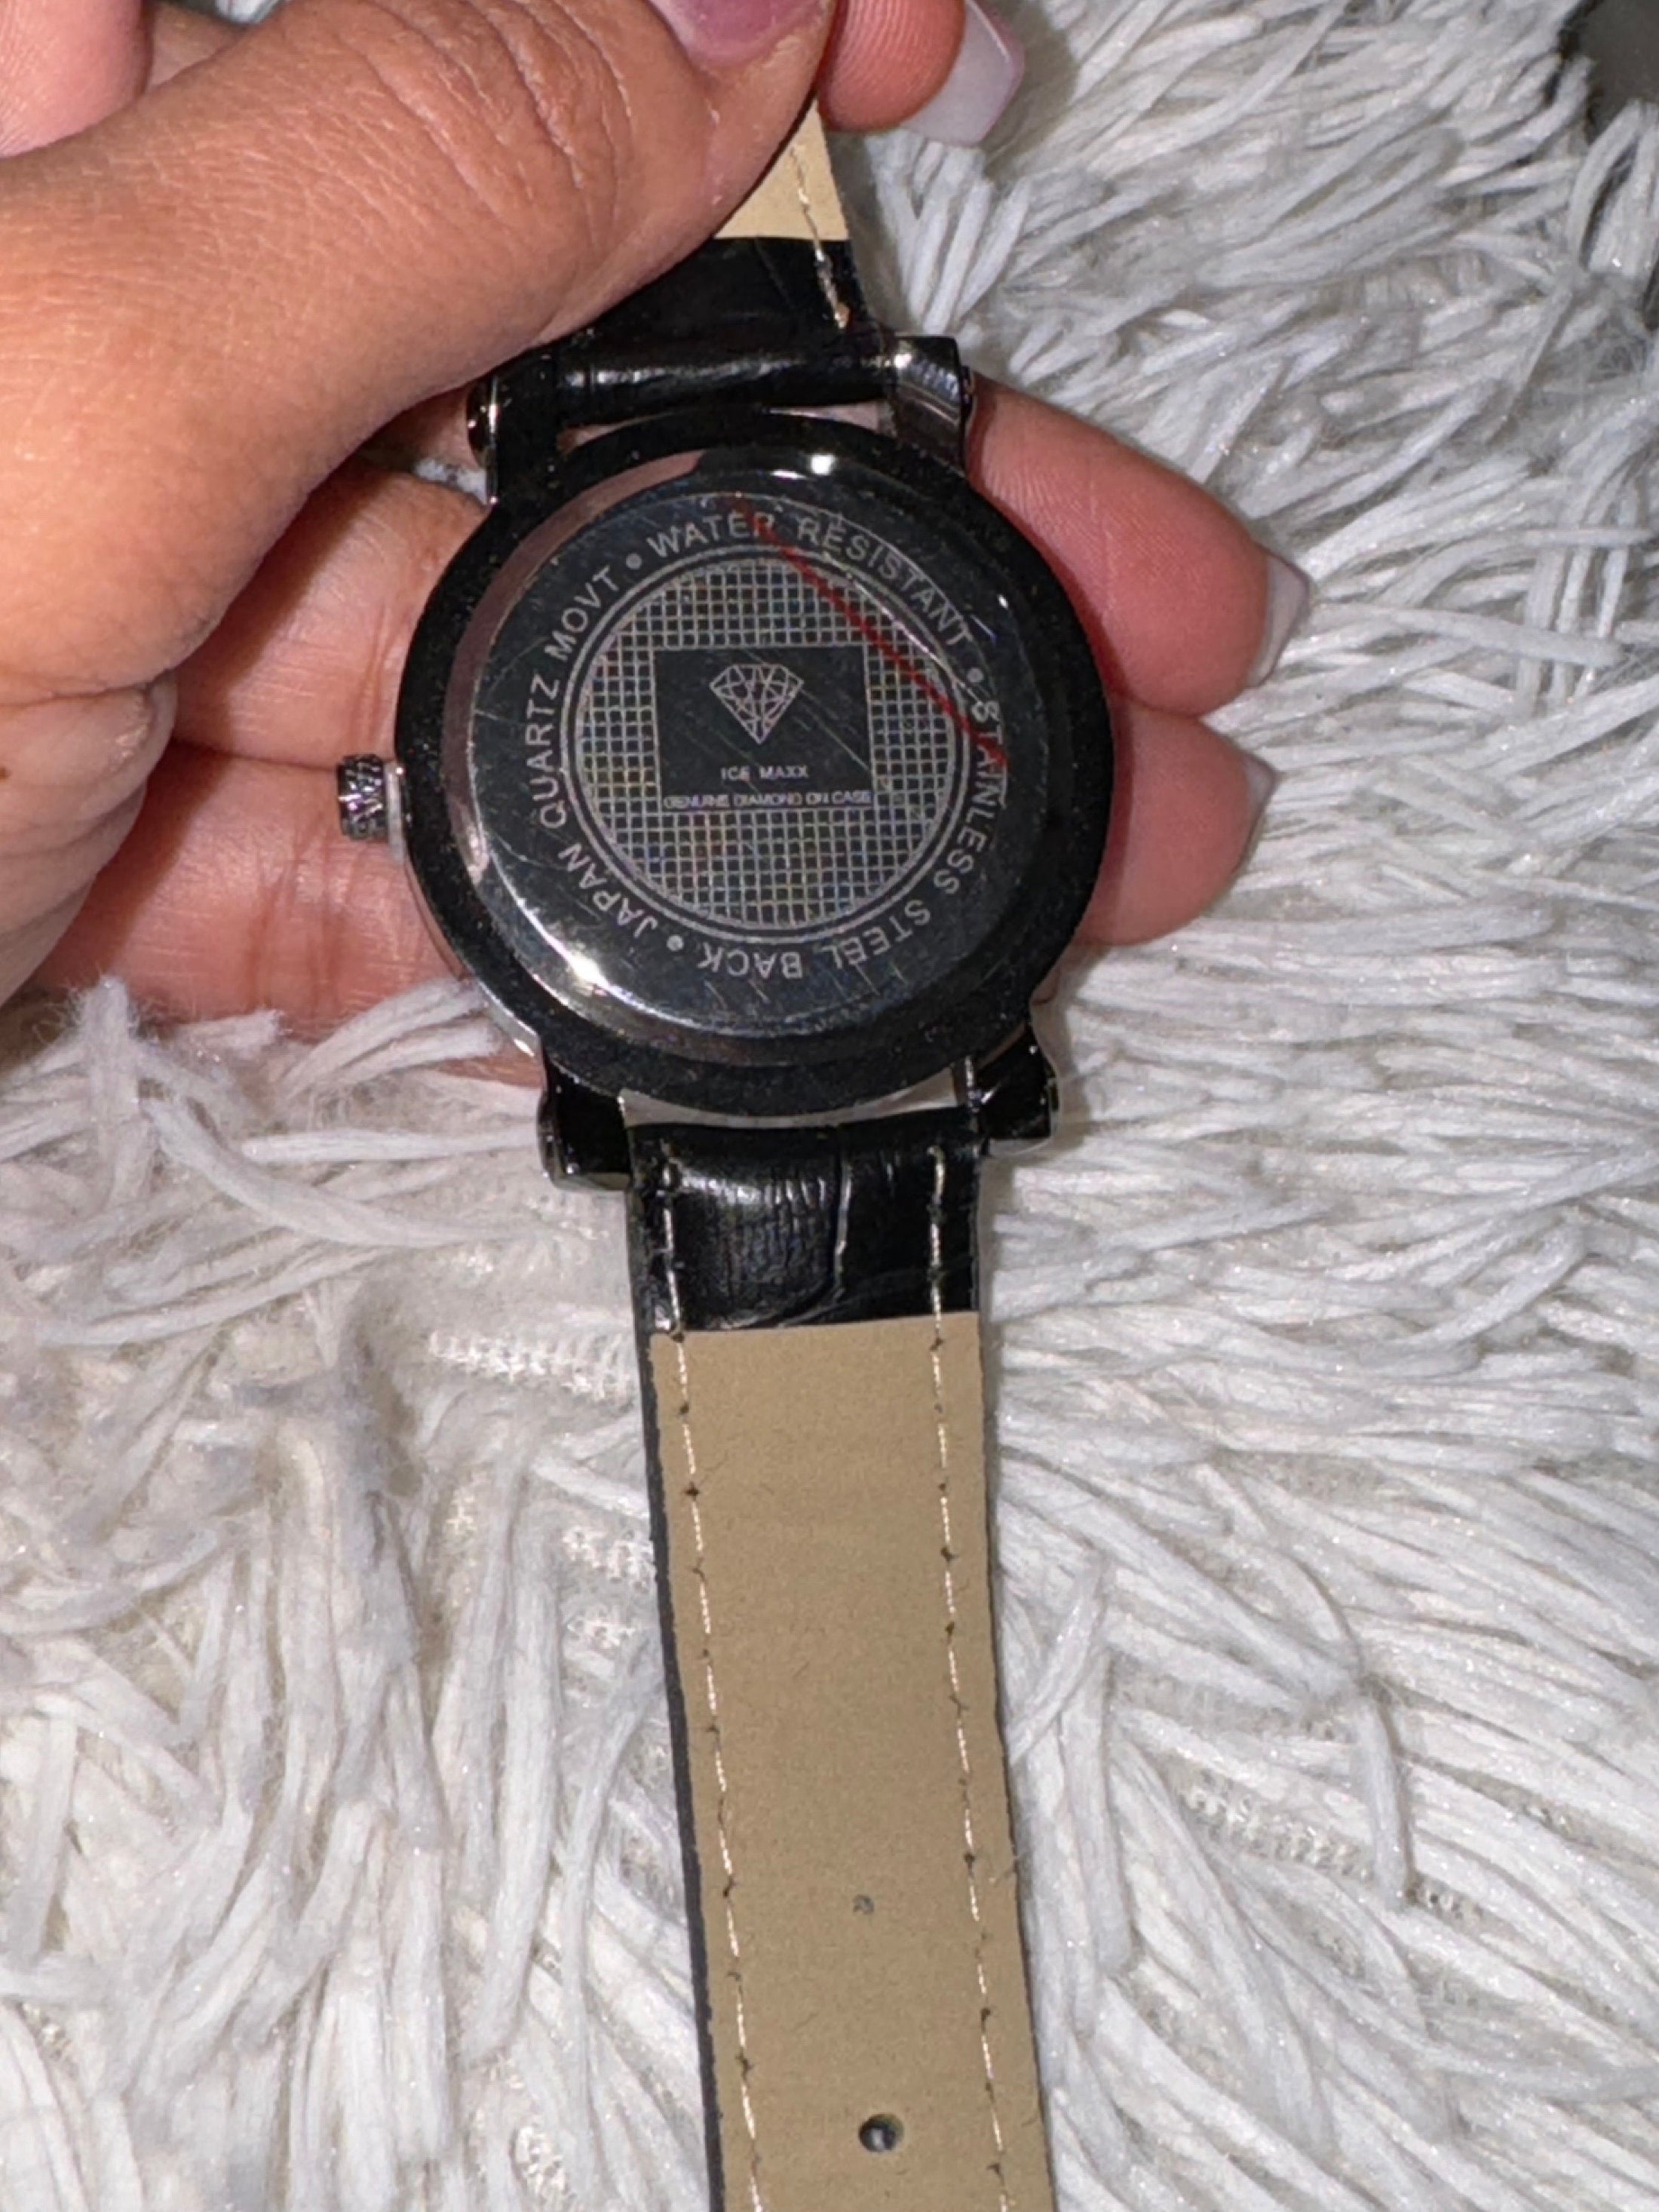 Real Diamond watch - Women Diamond Watch - Genuine 1/10 Ctw Natural Diamonds - Perfect Gift for Her, Anniversary, Birthday, Christmas Gift